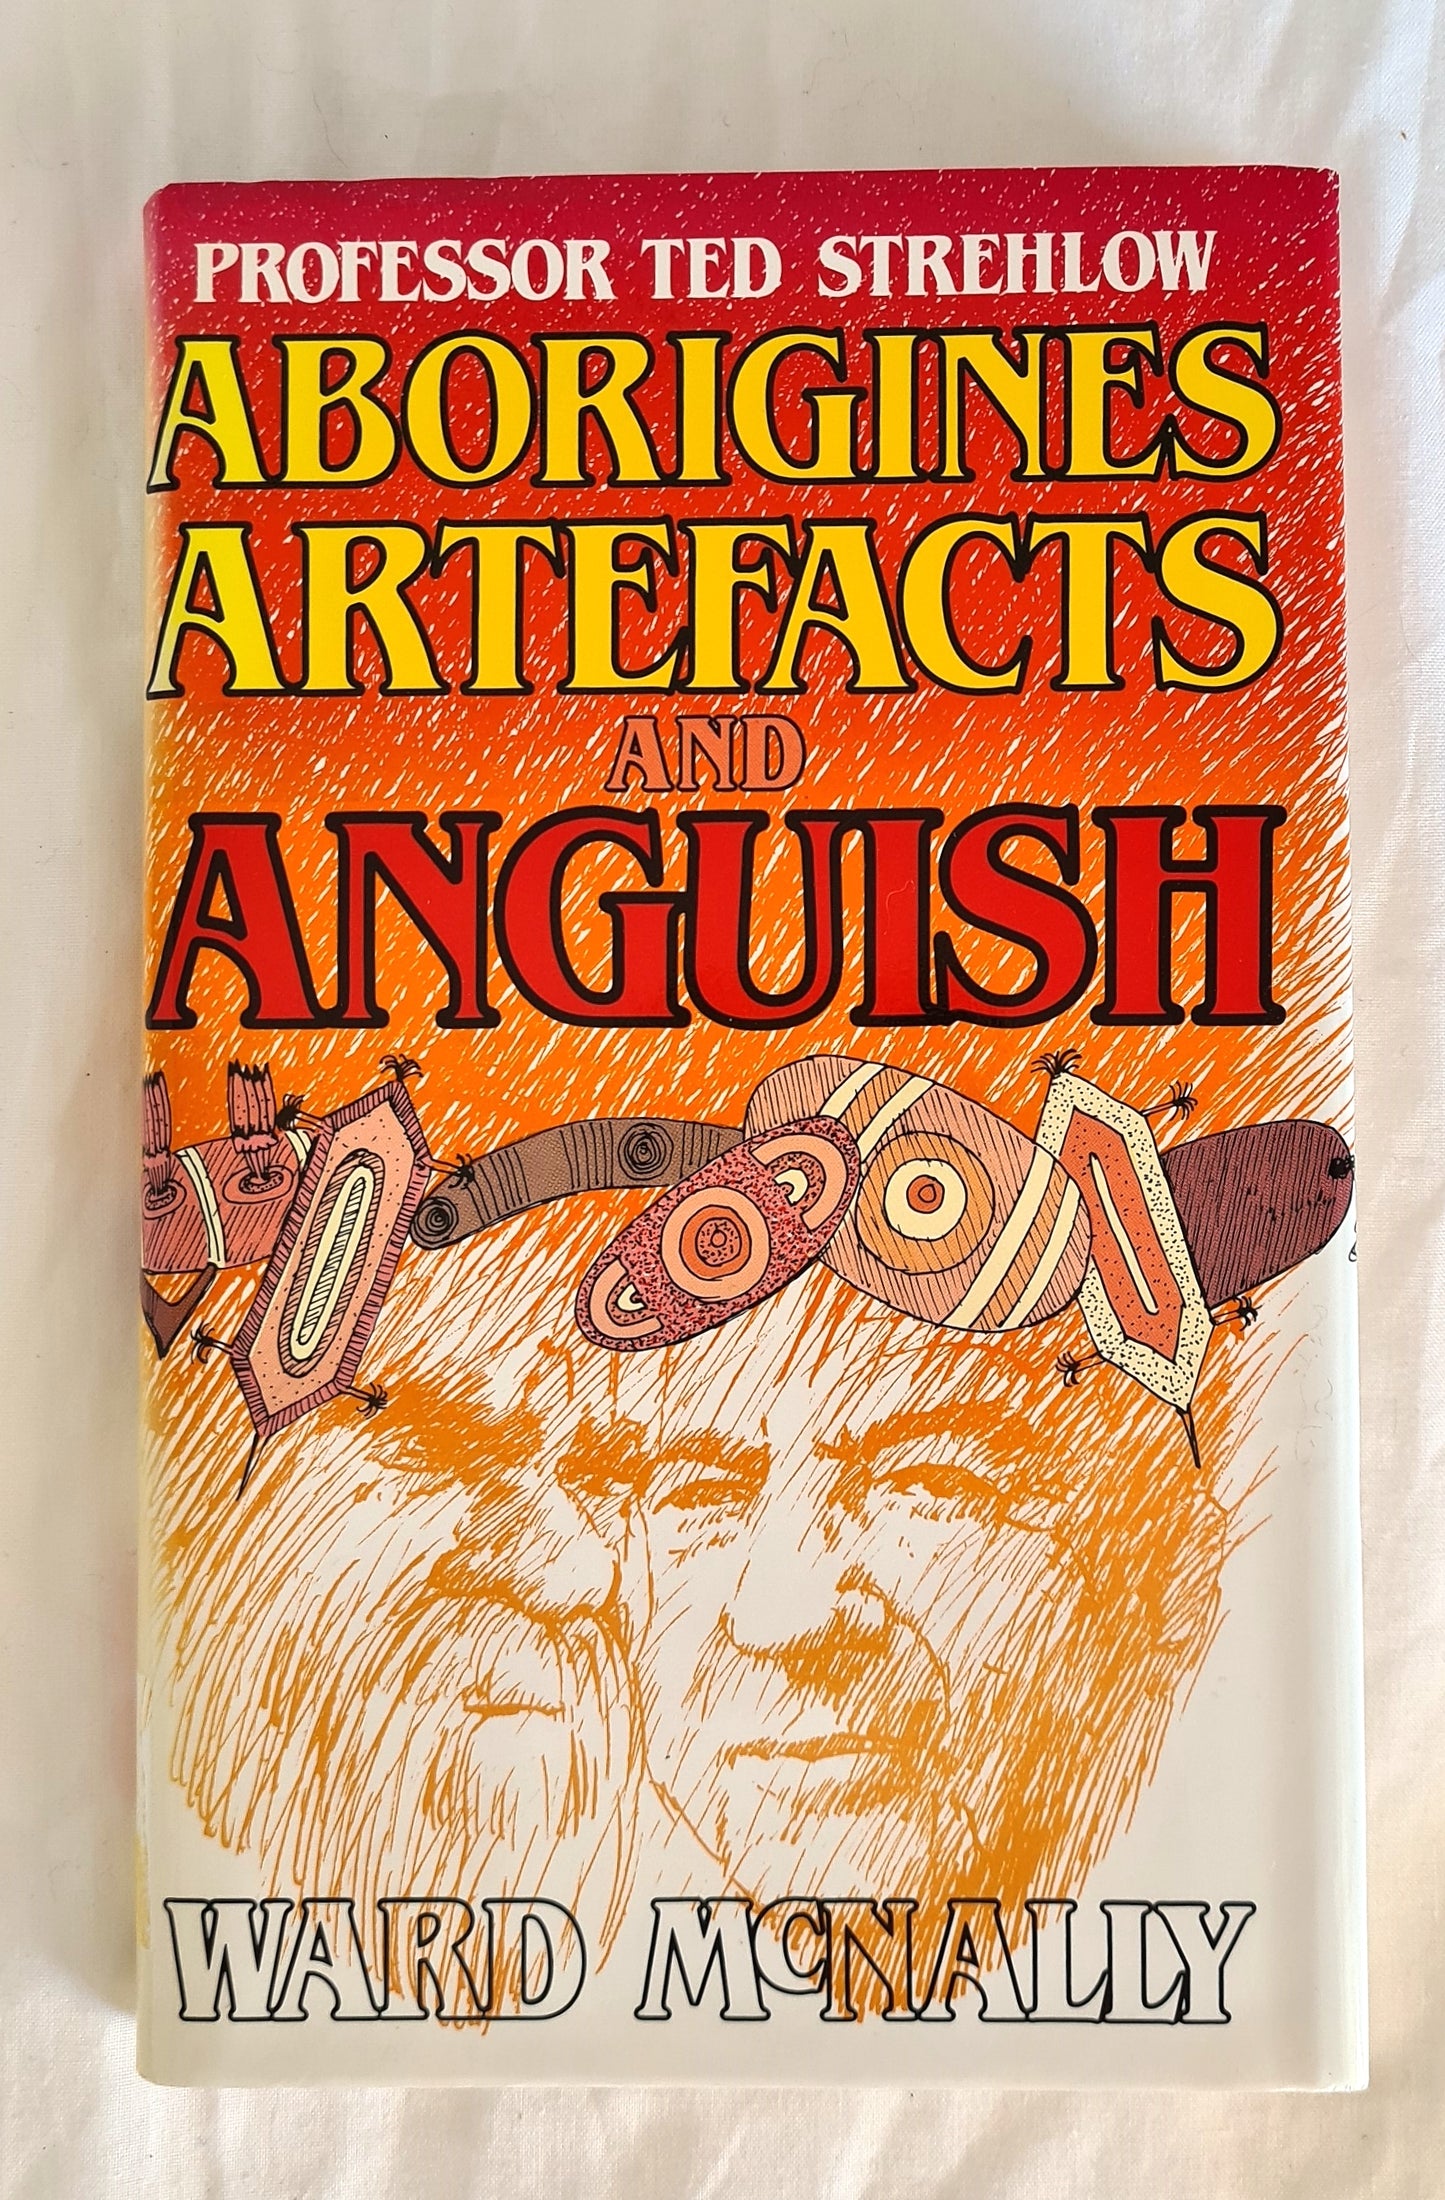 Aborigines Artefacts and Anguish by Ward McNally